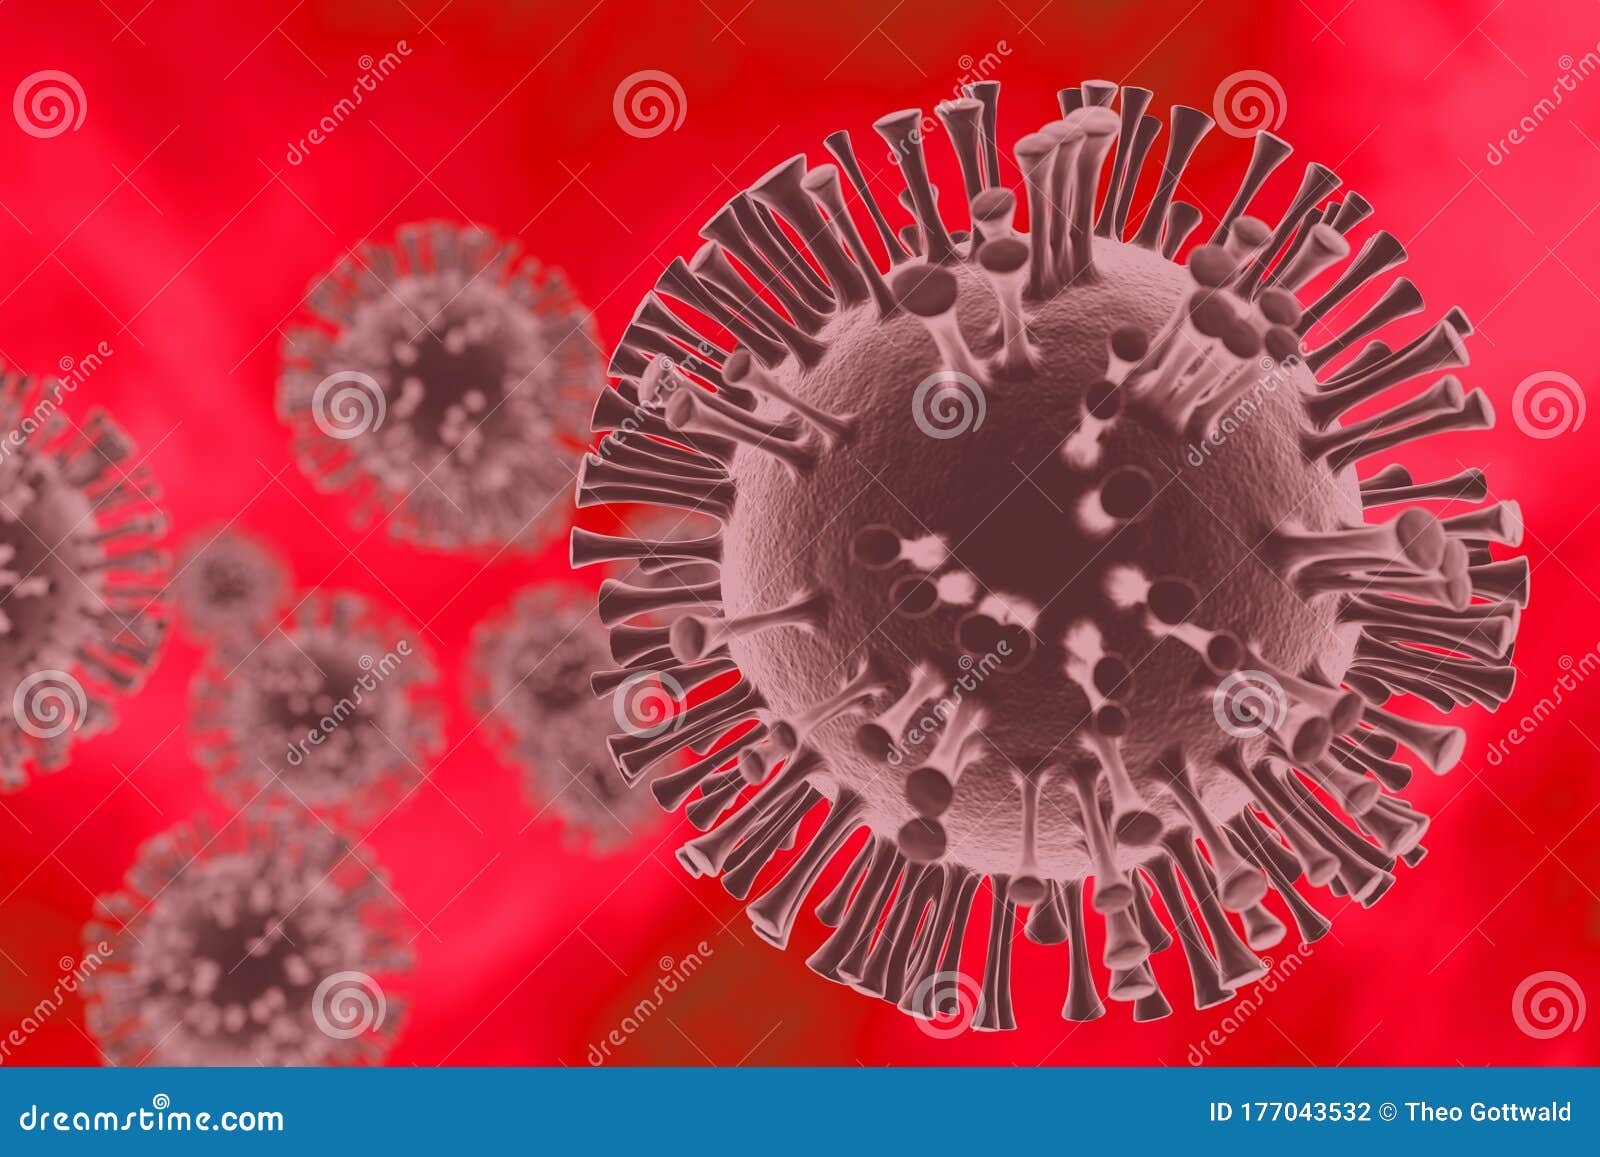 covid-19 virus 